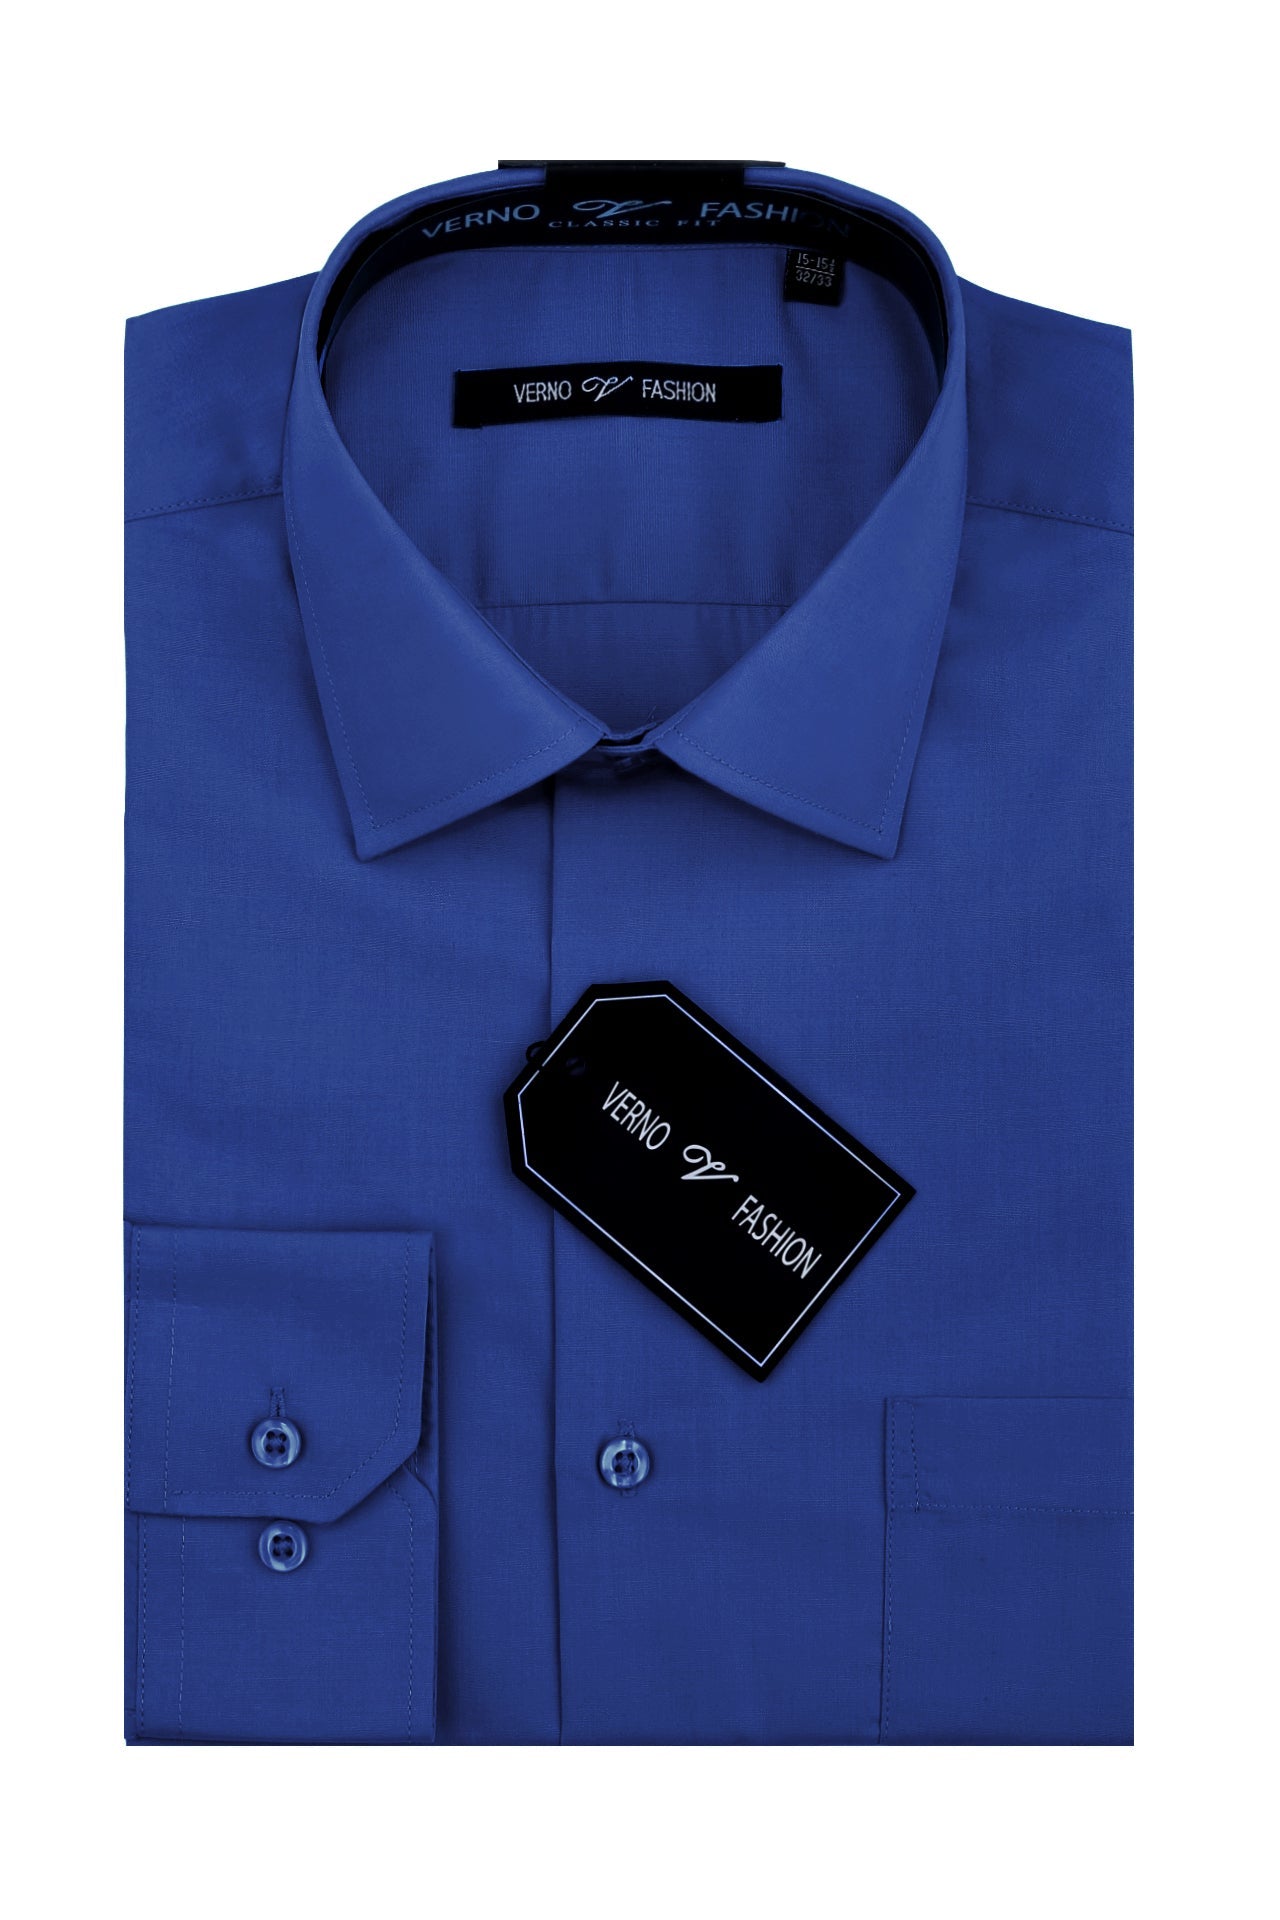 Men's Regular Fit Cotton Blend Dress Shirt in Royal Blue